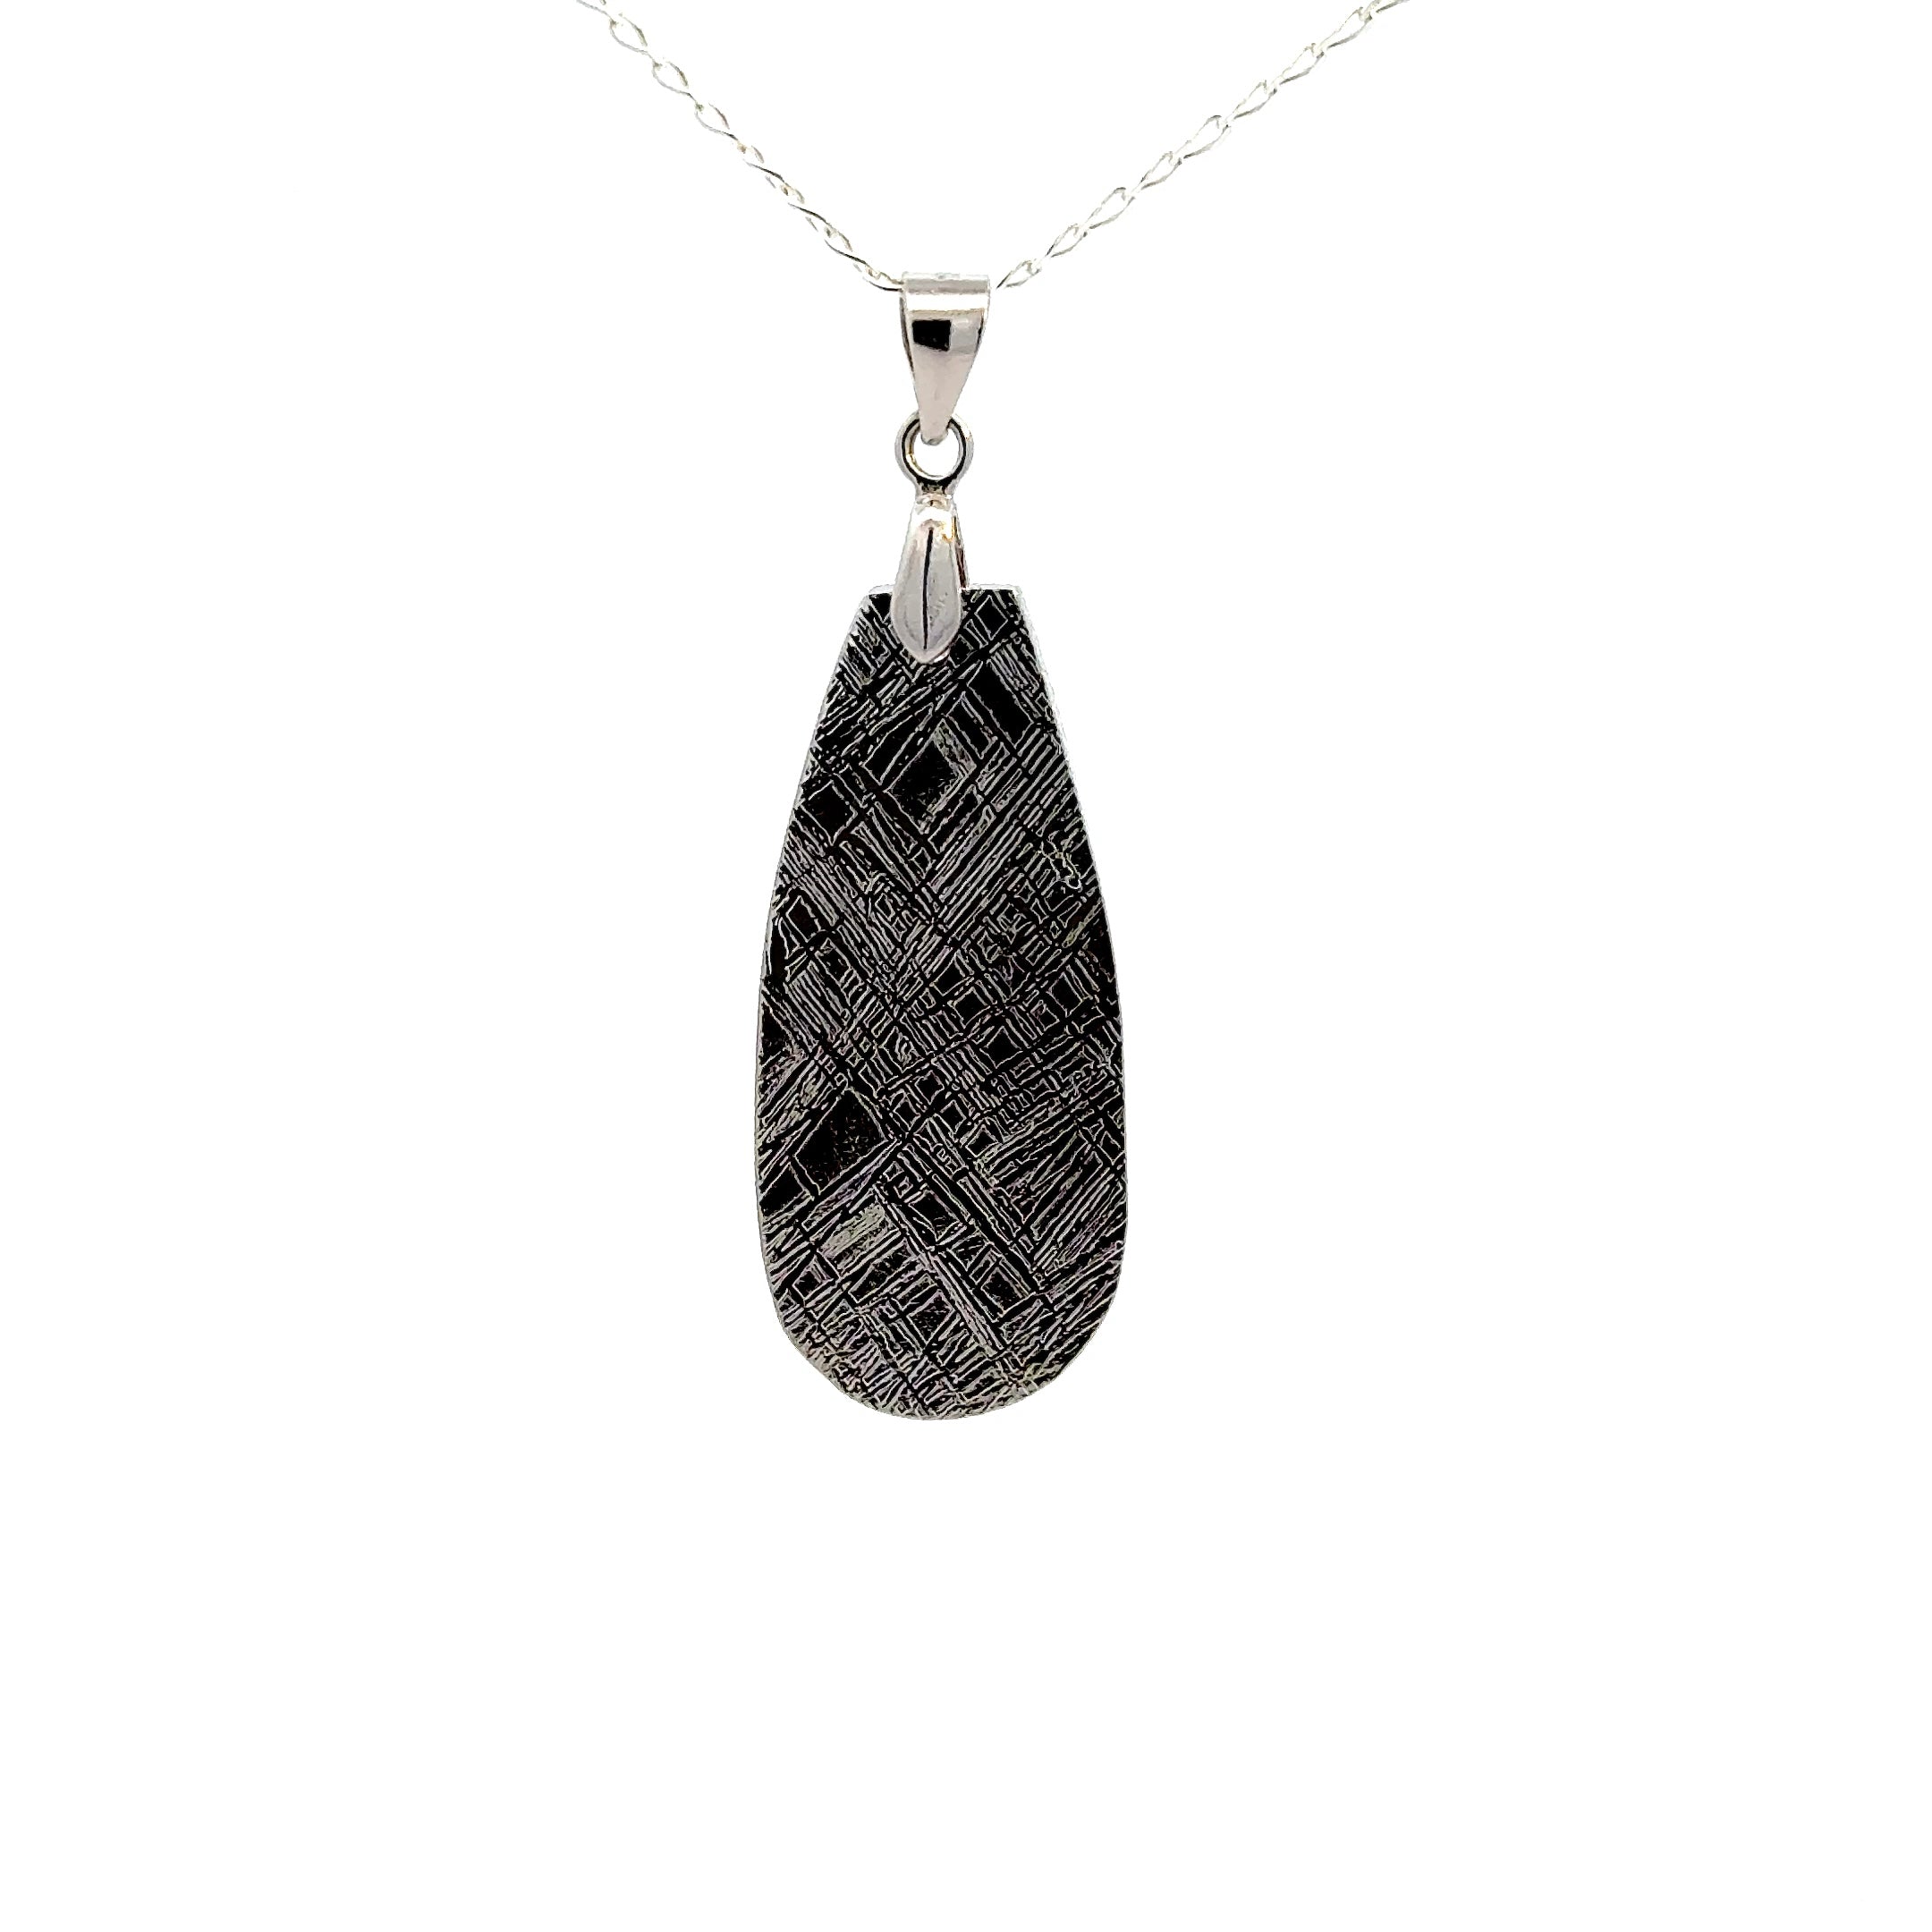 Pear Cut Muonionalusta Meteorite Necklace in Sterling Silver